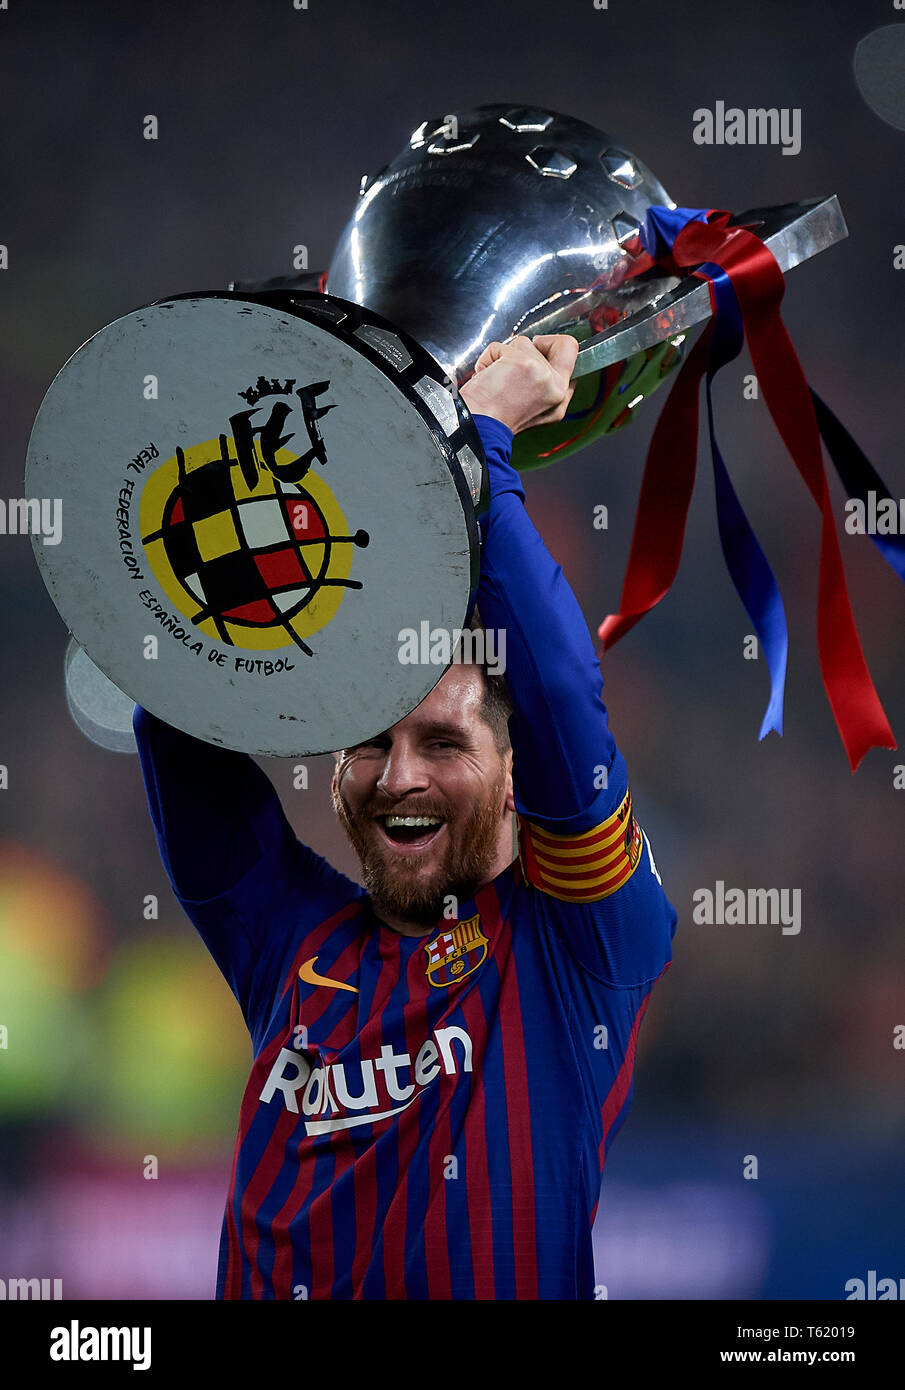 Barcelona, Spain. 27th Apr, 2019. Soccer: Liga Santander 2018/19 : Lionel Messi Barcelona celebrates with the La Liga trophy following his victory in Spanish Primera Division "Liga (Espanola)"